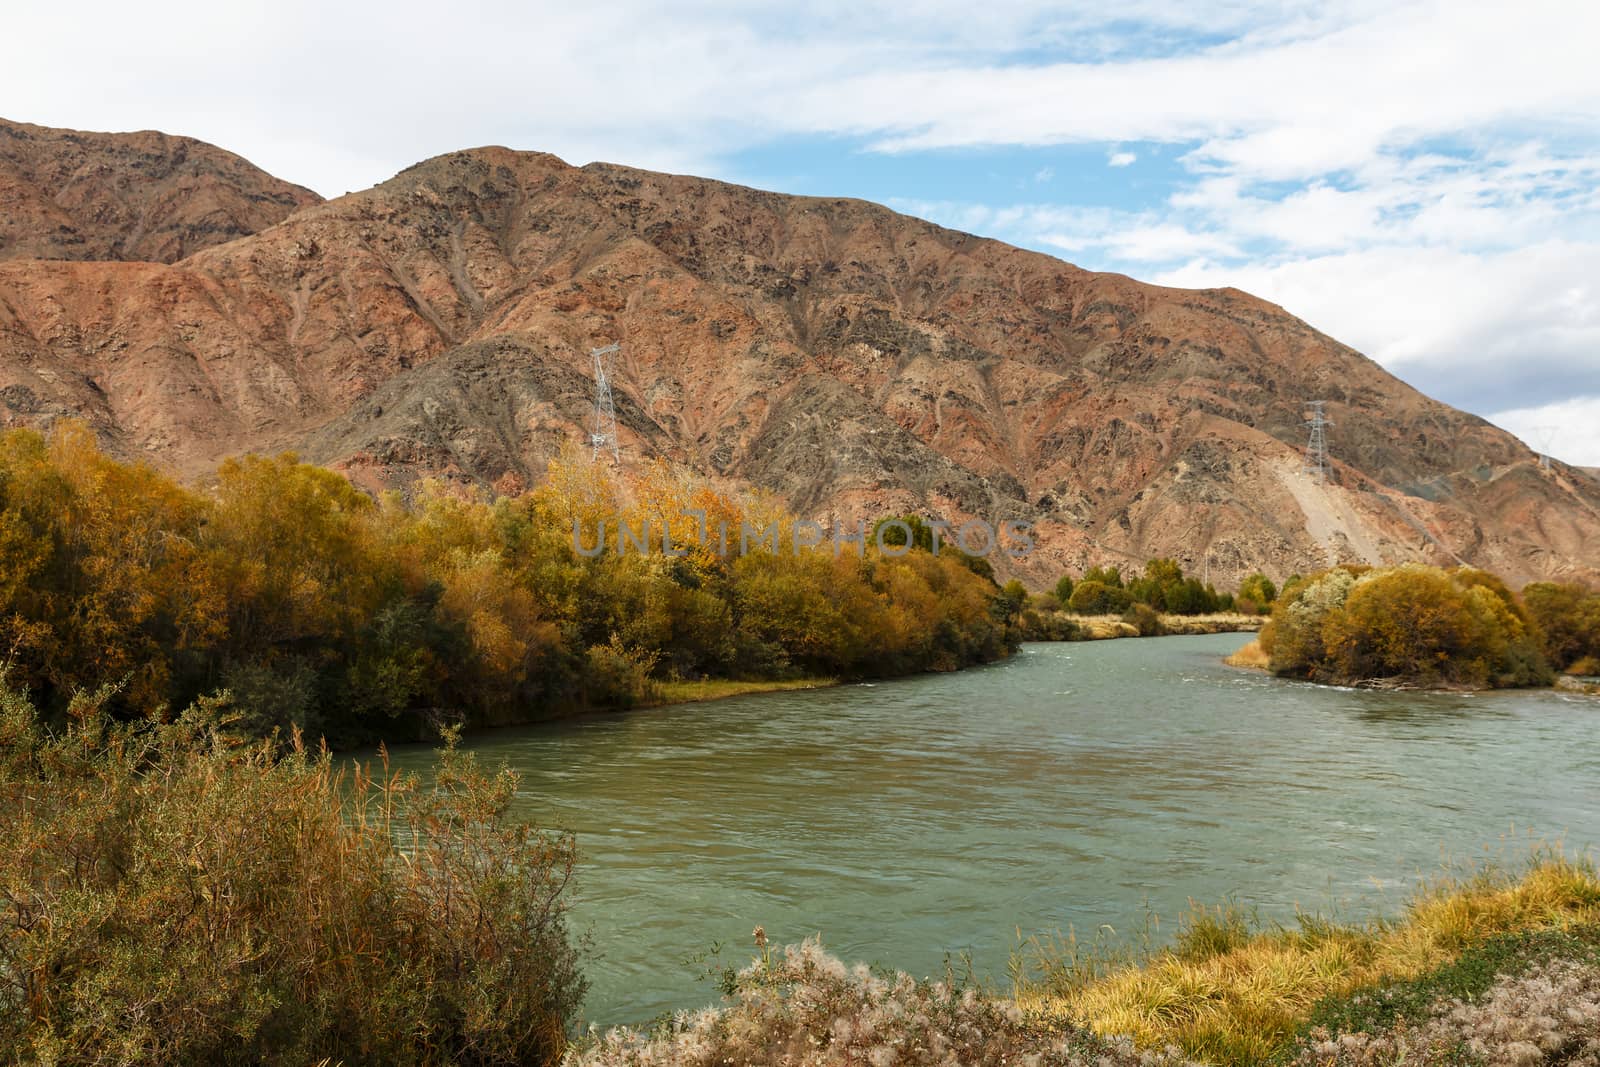 Chu River in Kyrgyzstan, border between the Issyk-Kul region and the Naryn region